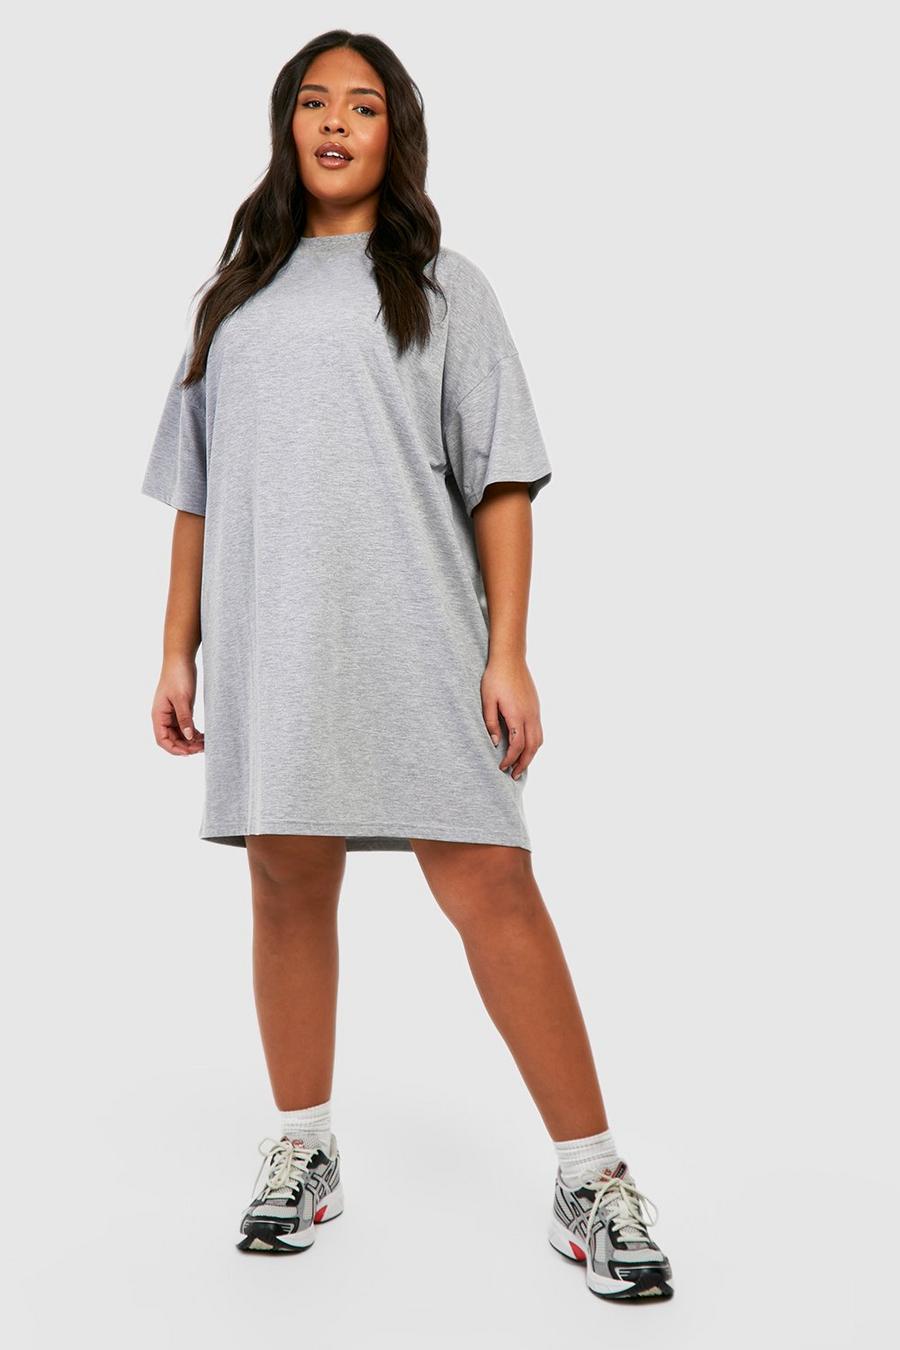 https://media.boohoo.com/i/boohoo/gzz46936_grey%20marl_xl/female-grey%20marl-plus-cotton-short-sleeve-oversized-t-shirt-dress/?w=900&qlt=default&fmt.jp2.qlt=70&fmt=auto&sm=fit